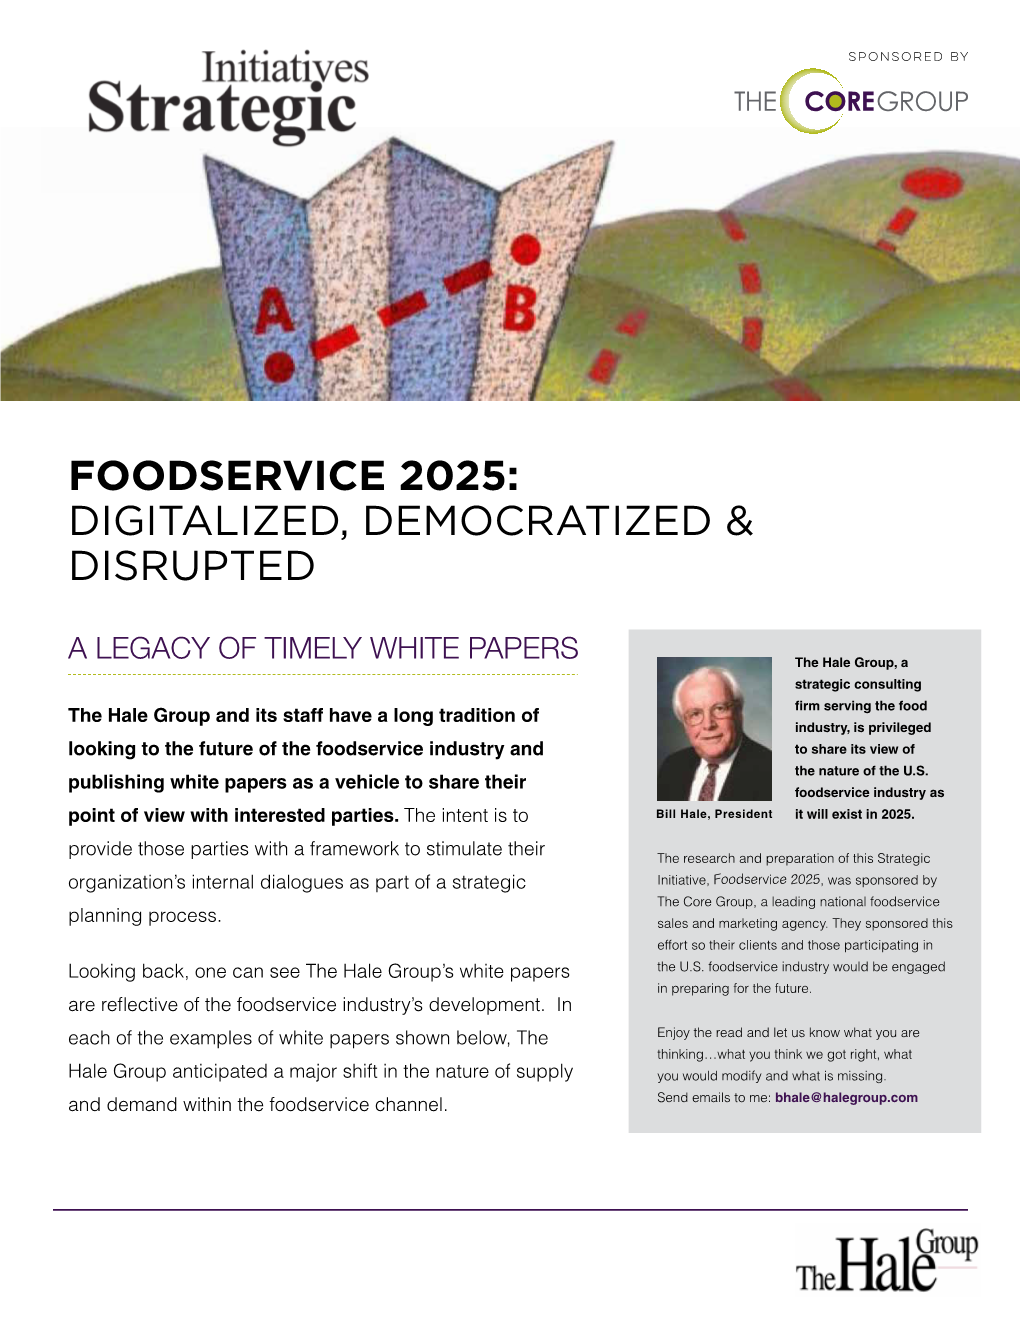 Foodservice 2025: Digitalized, Democratized & Disrupted